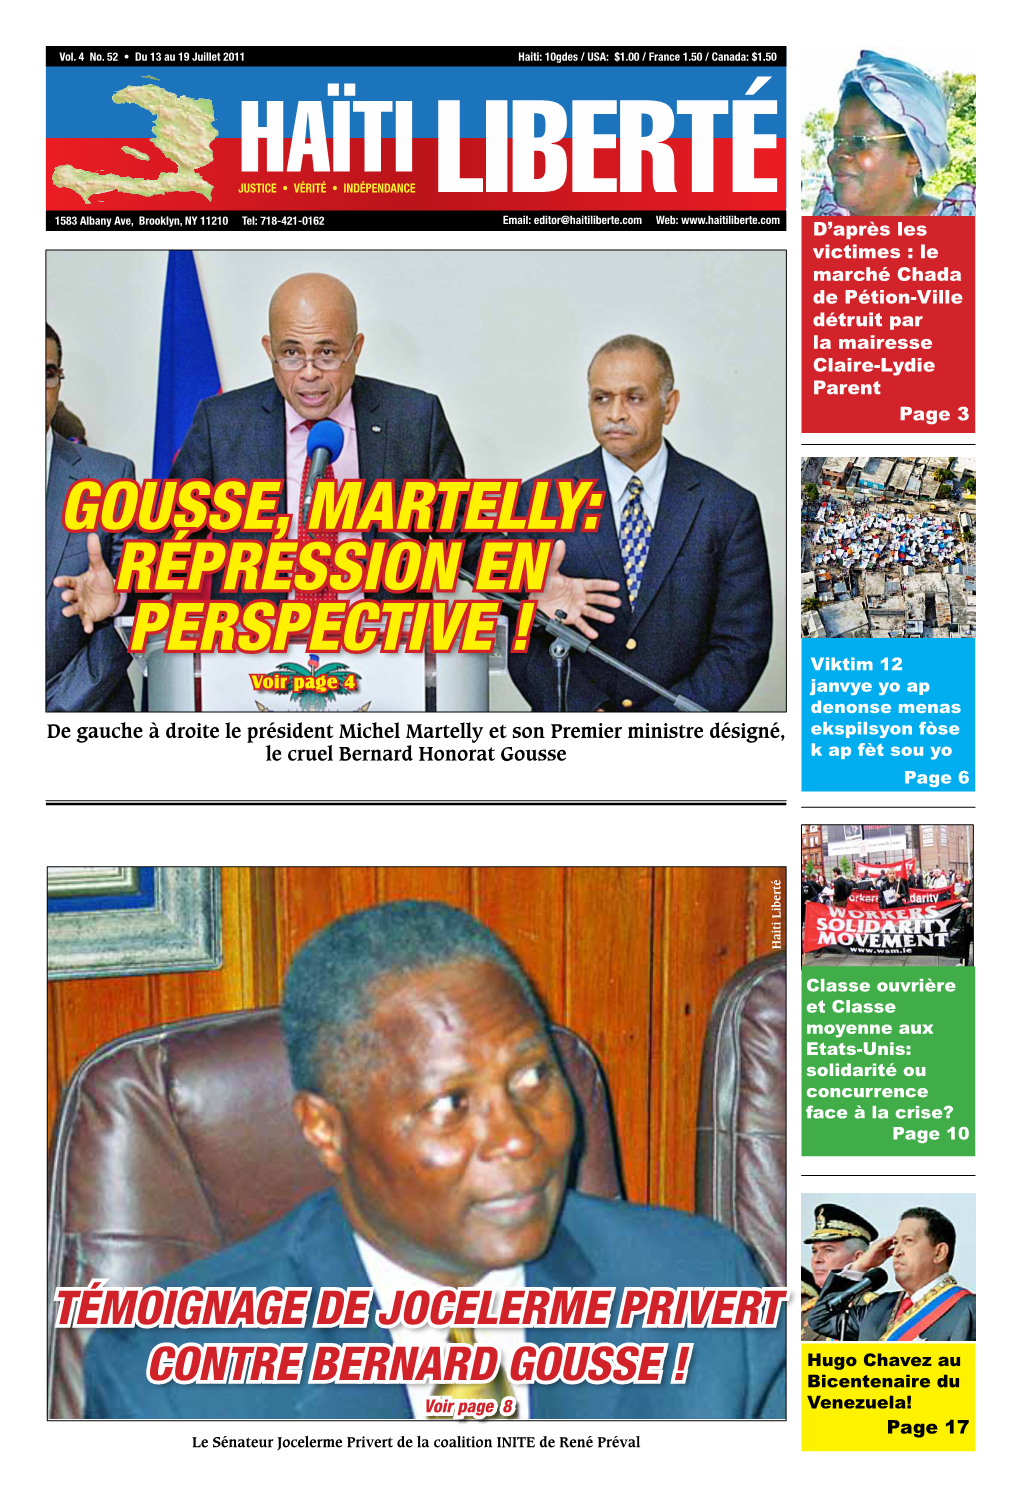 Gousse, Martelly